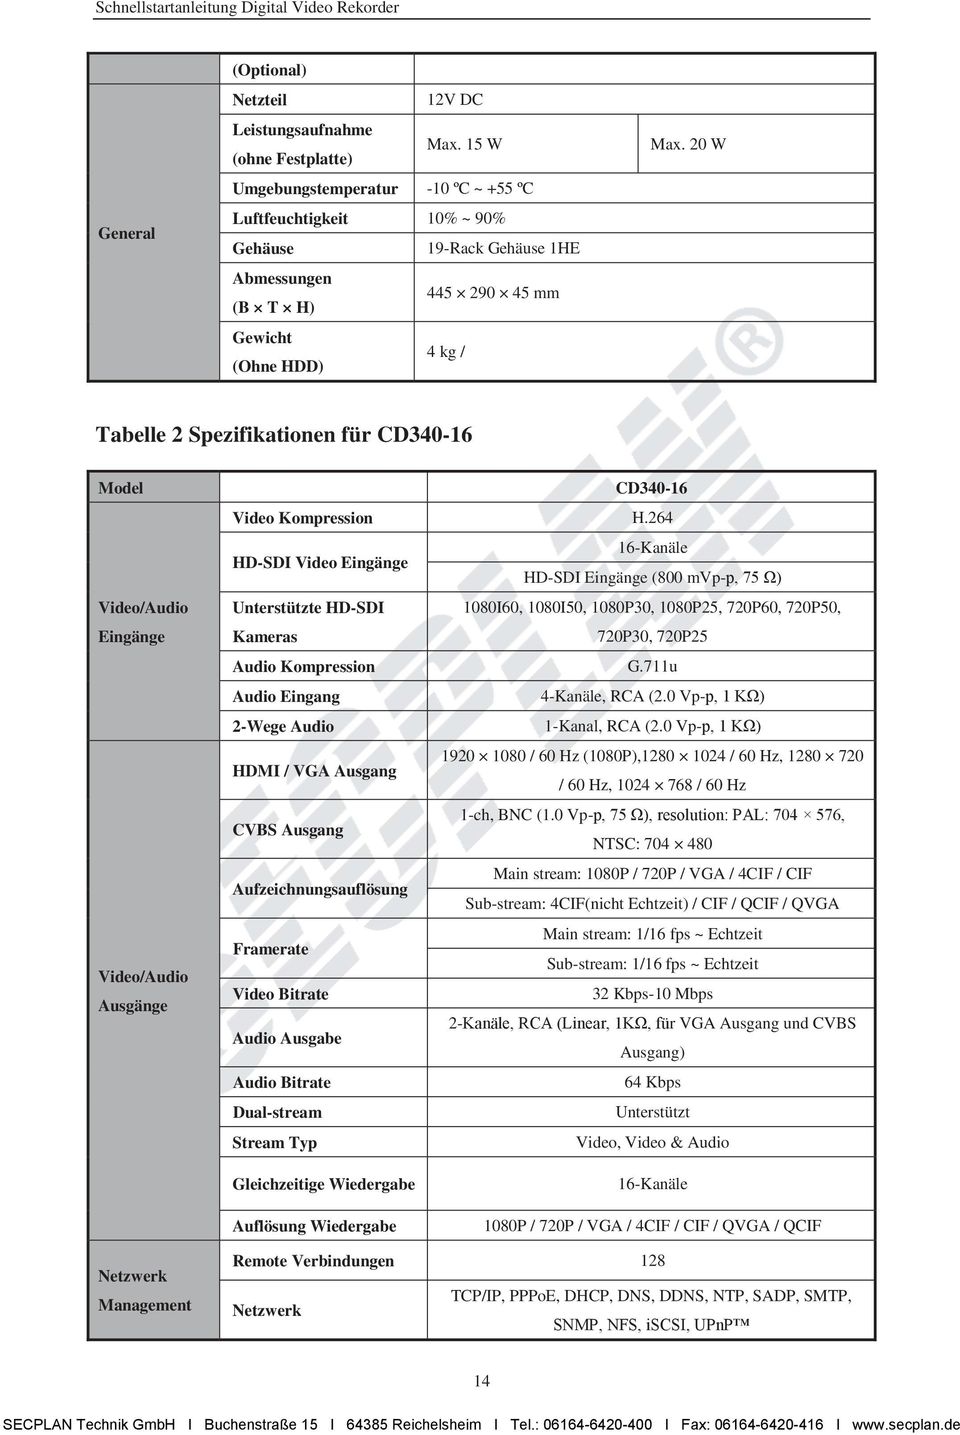 20 W Tabelle 2 Spezifikationen für CD340-16 Model Video/Audio Eingänge Video/Audio Ausgänge CD340-16 Video Kompression H.